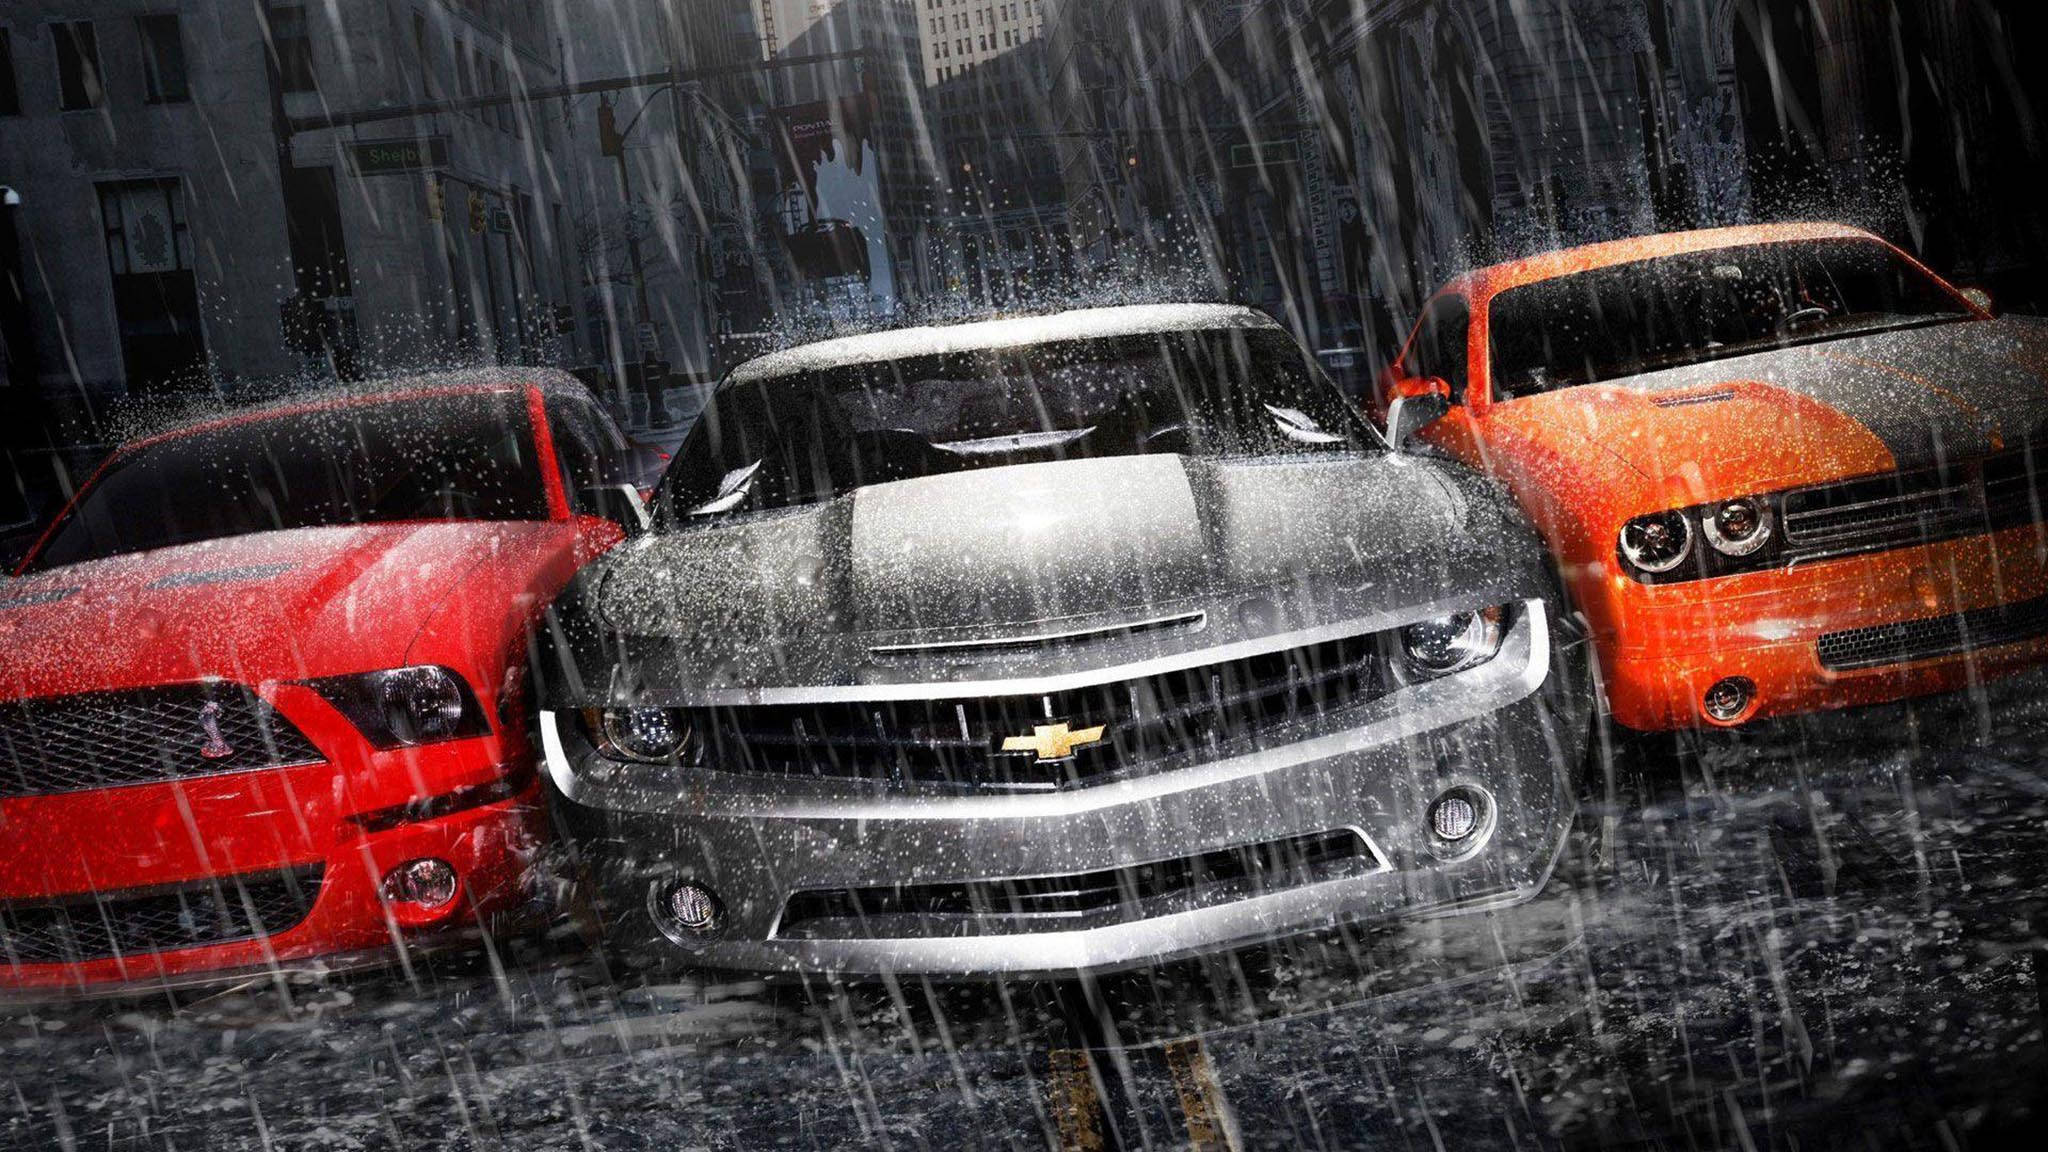 Download Cool Cars In The Rain Wallpaper